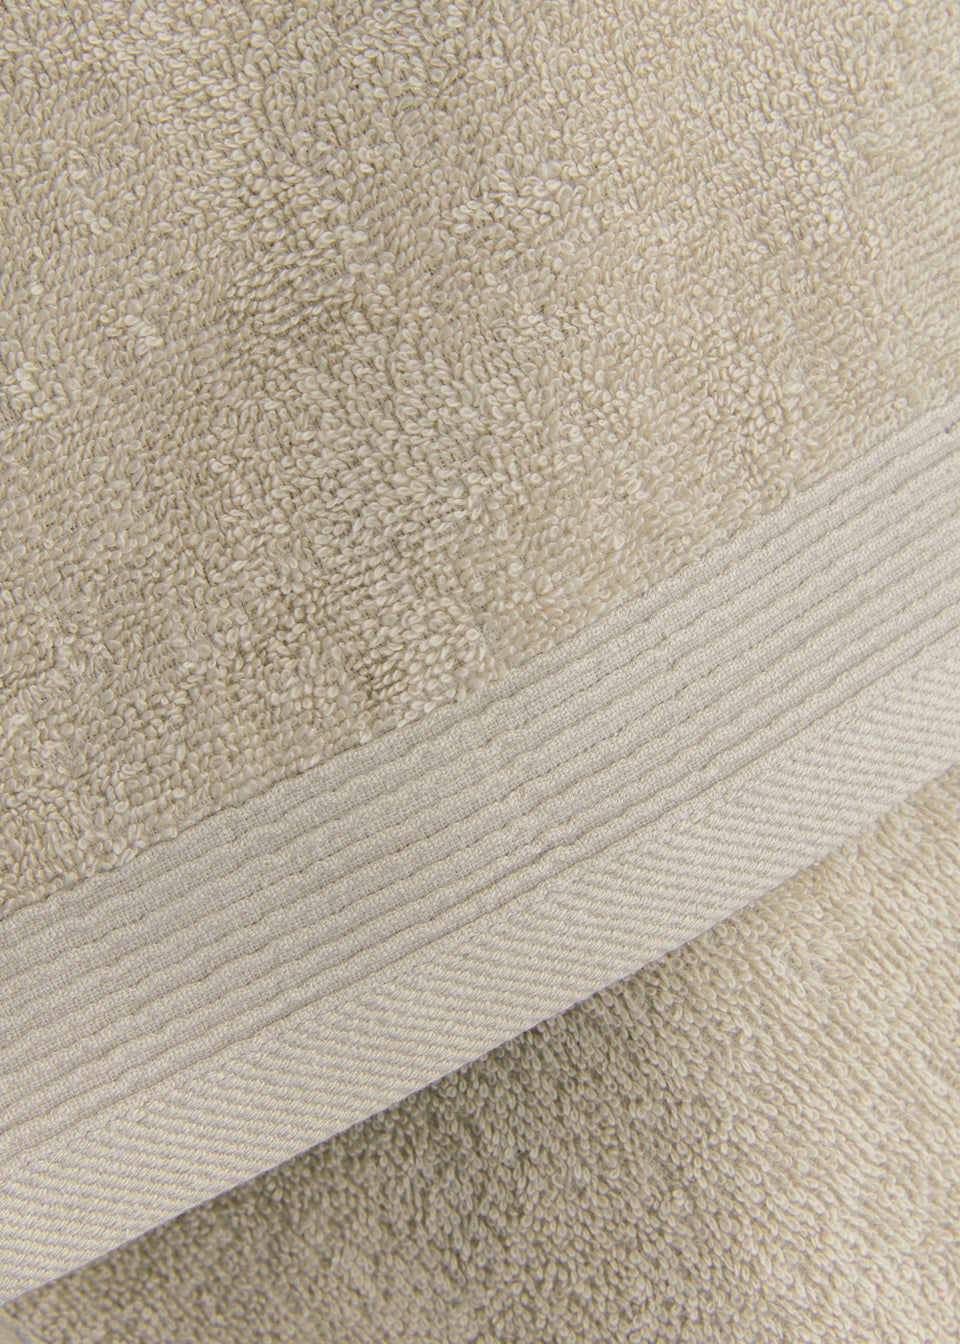 Beige Low Twist 100% Cotton Towels